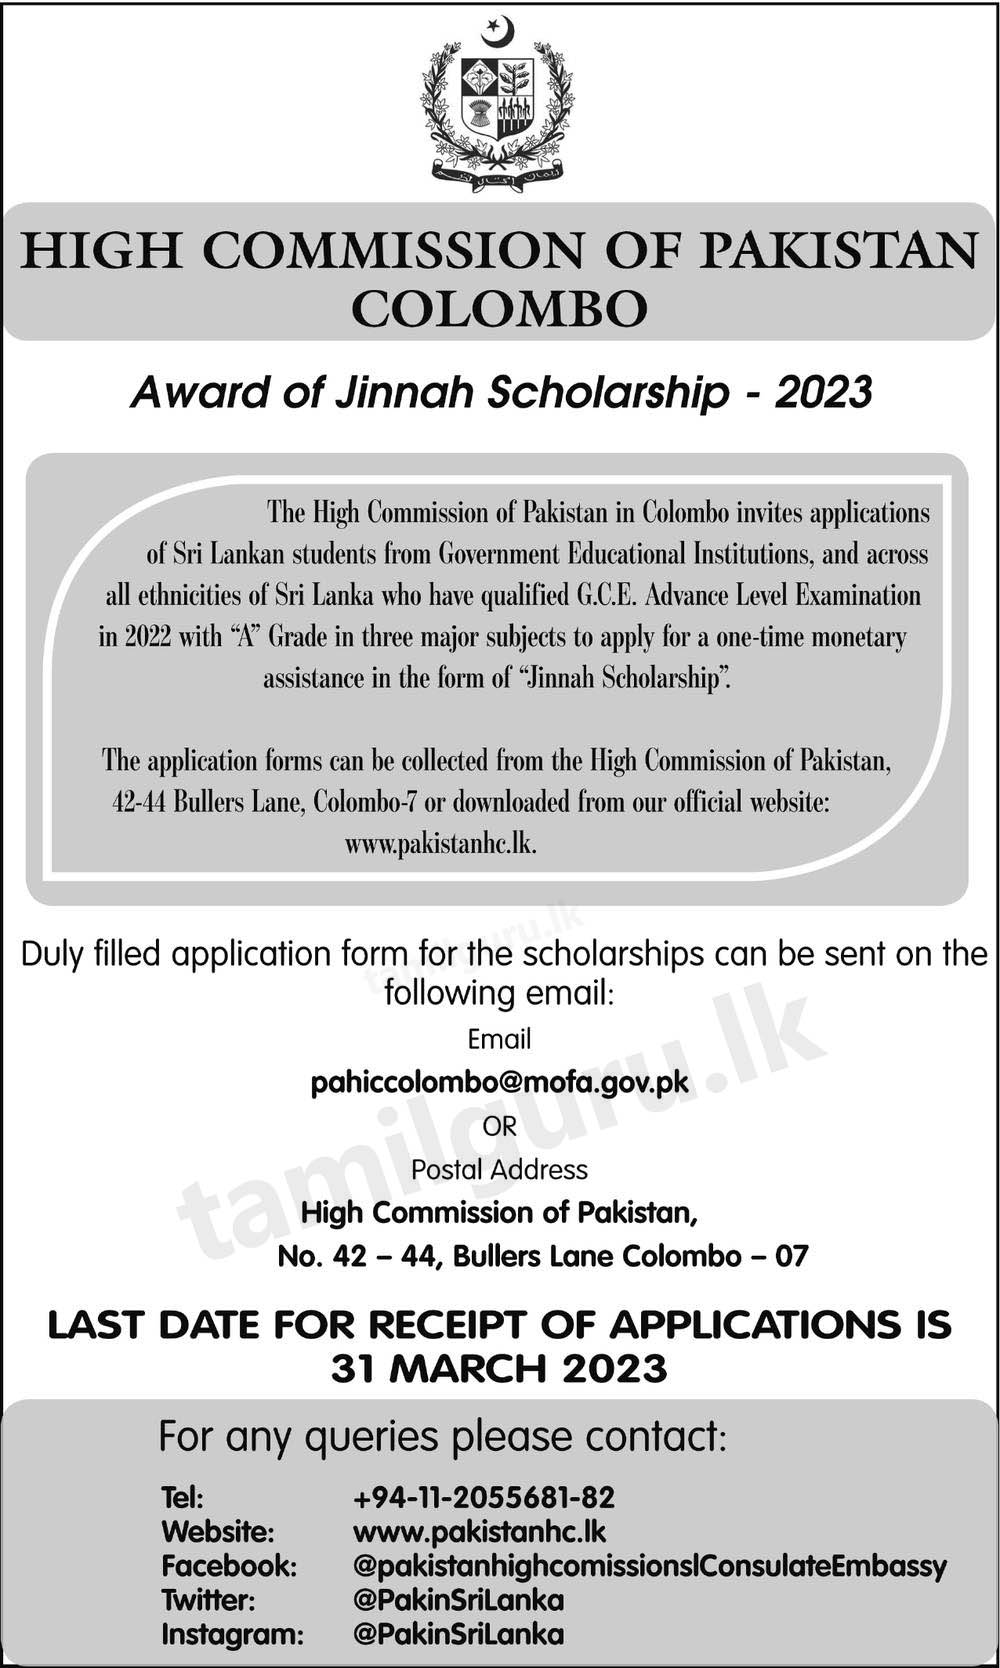 Award of Jinnah Scholarships 2023 for Sri Lankan Students (GCE AL 2022)